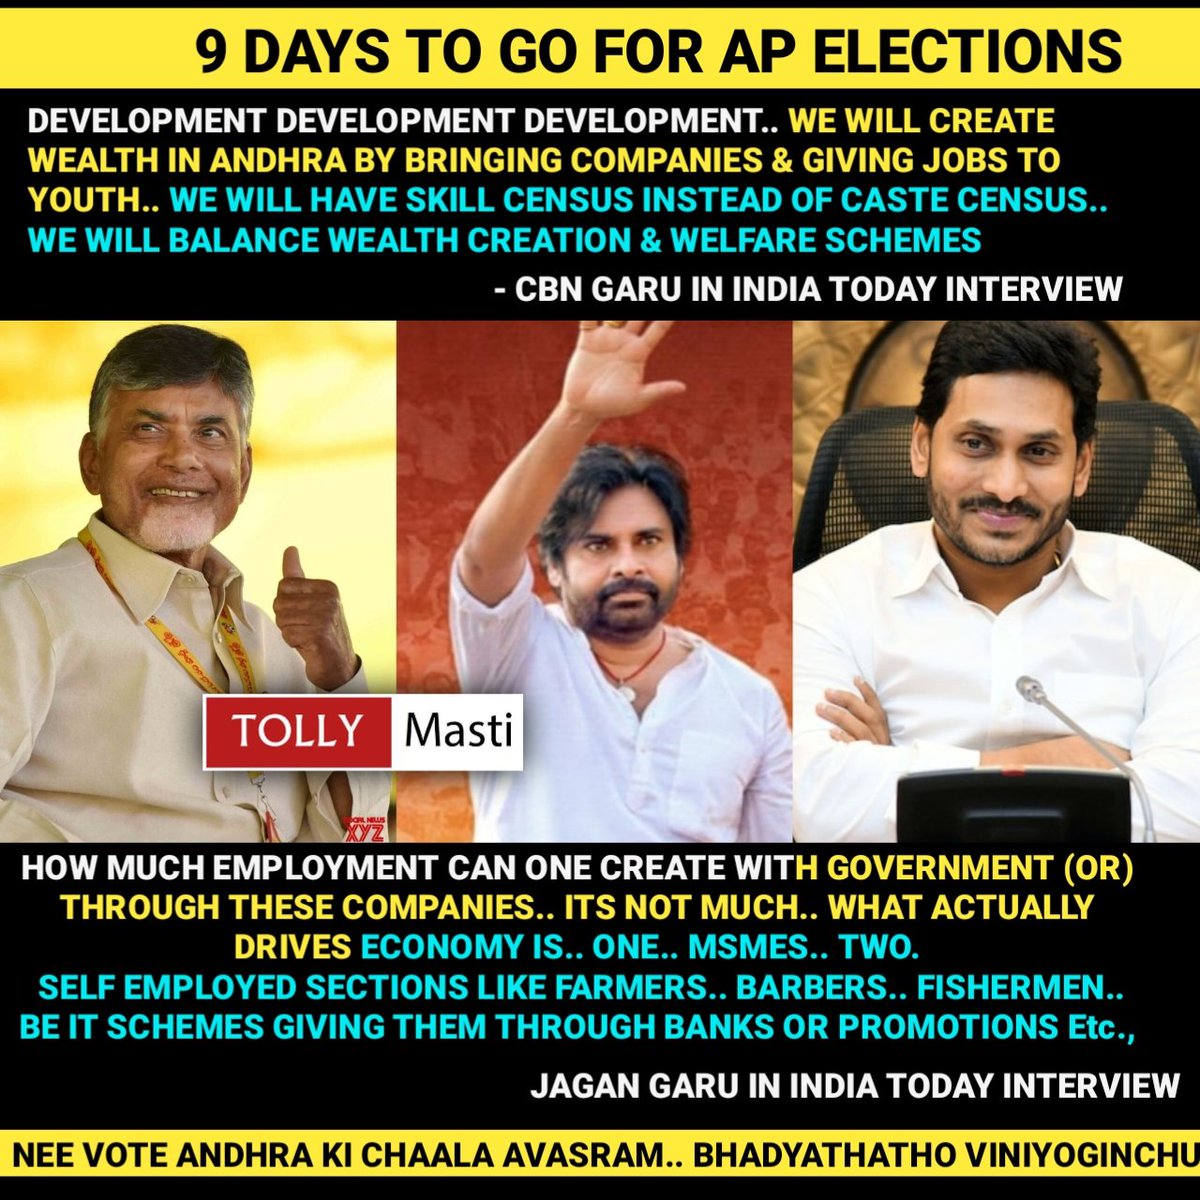 Retweet and share.. Let everyone gear for voting day.. @tollymasti #tollymasti 

#AndhraPradesh  #AndhraPradeshElection2024 #ChandraBabu #PawanKalyan #Jagan